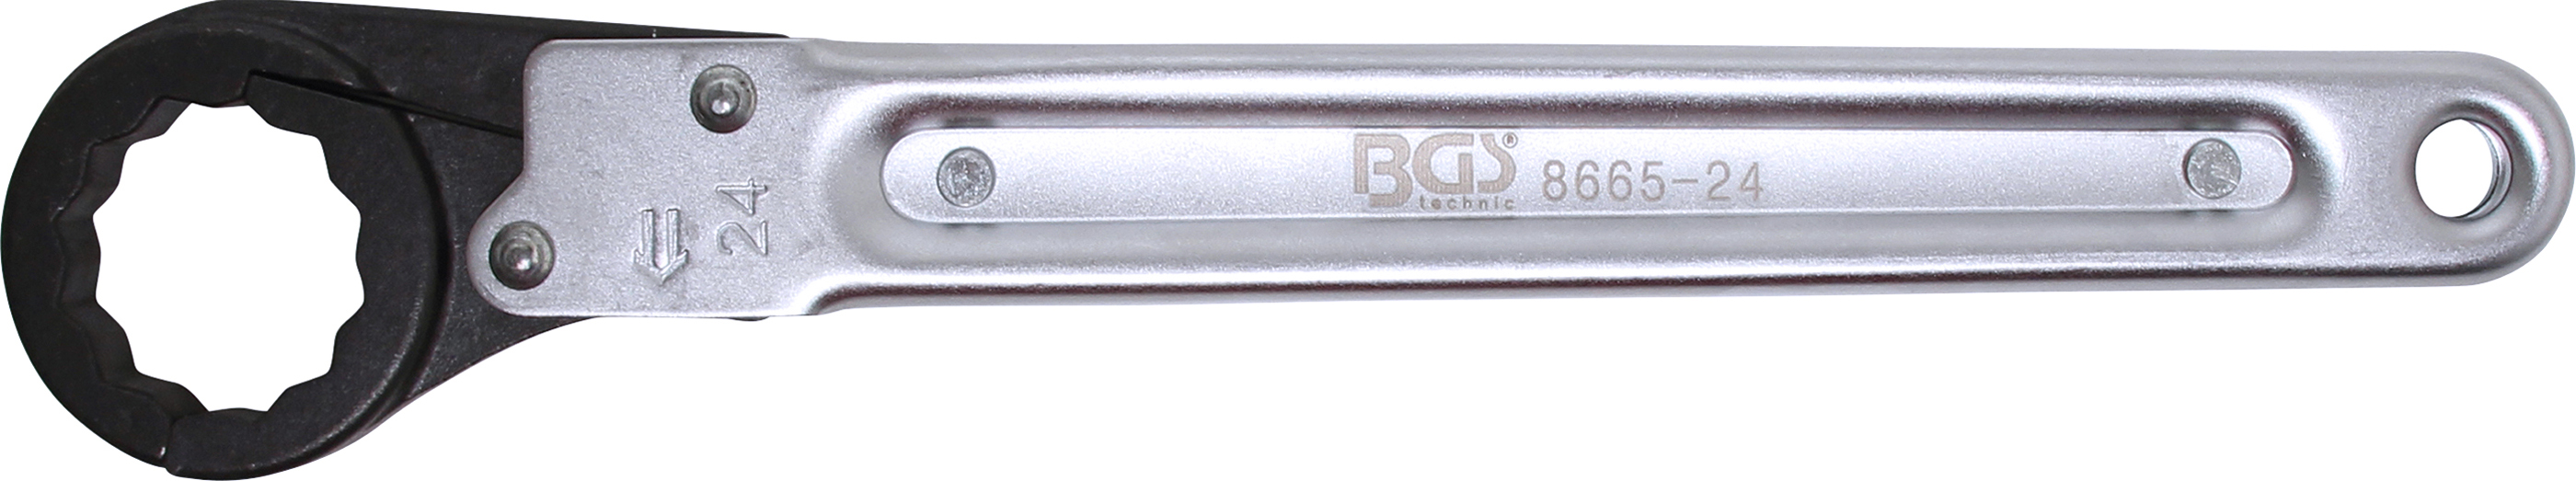 BGS Leitungs-Ratschenschlüssel | 24 mm